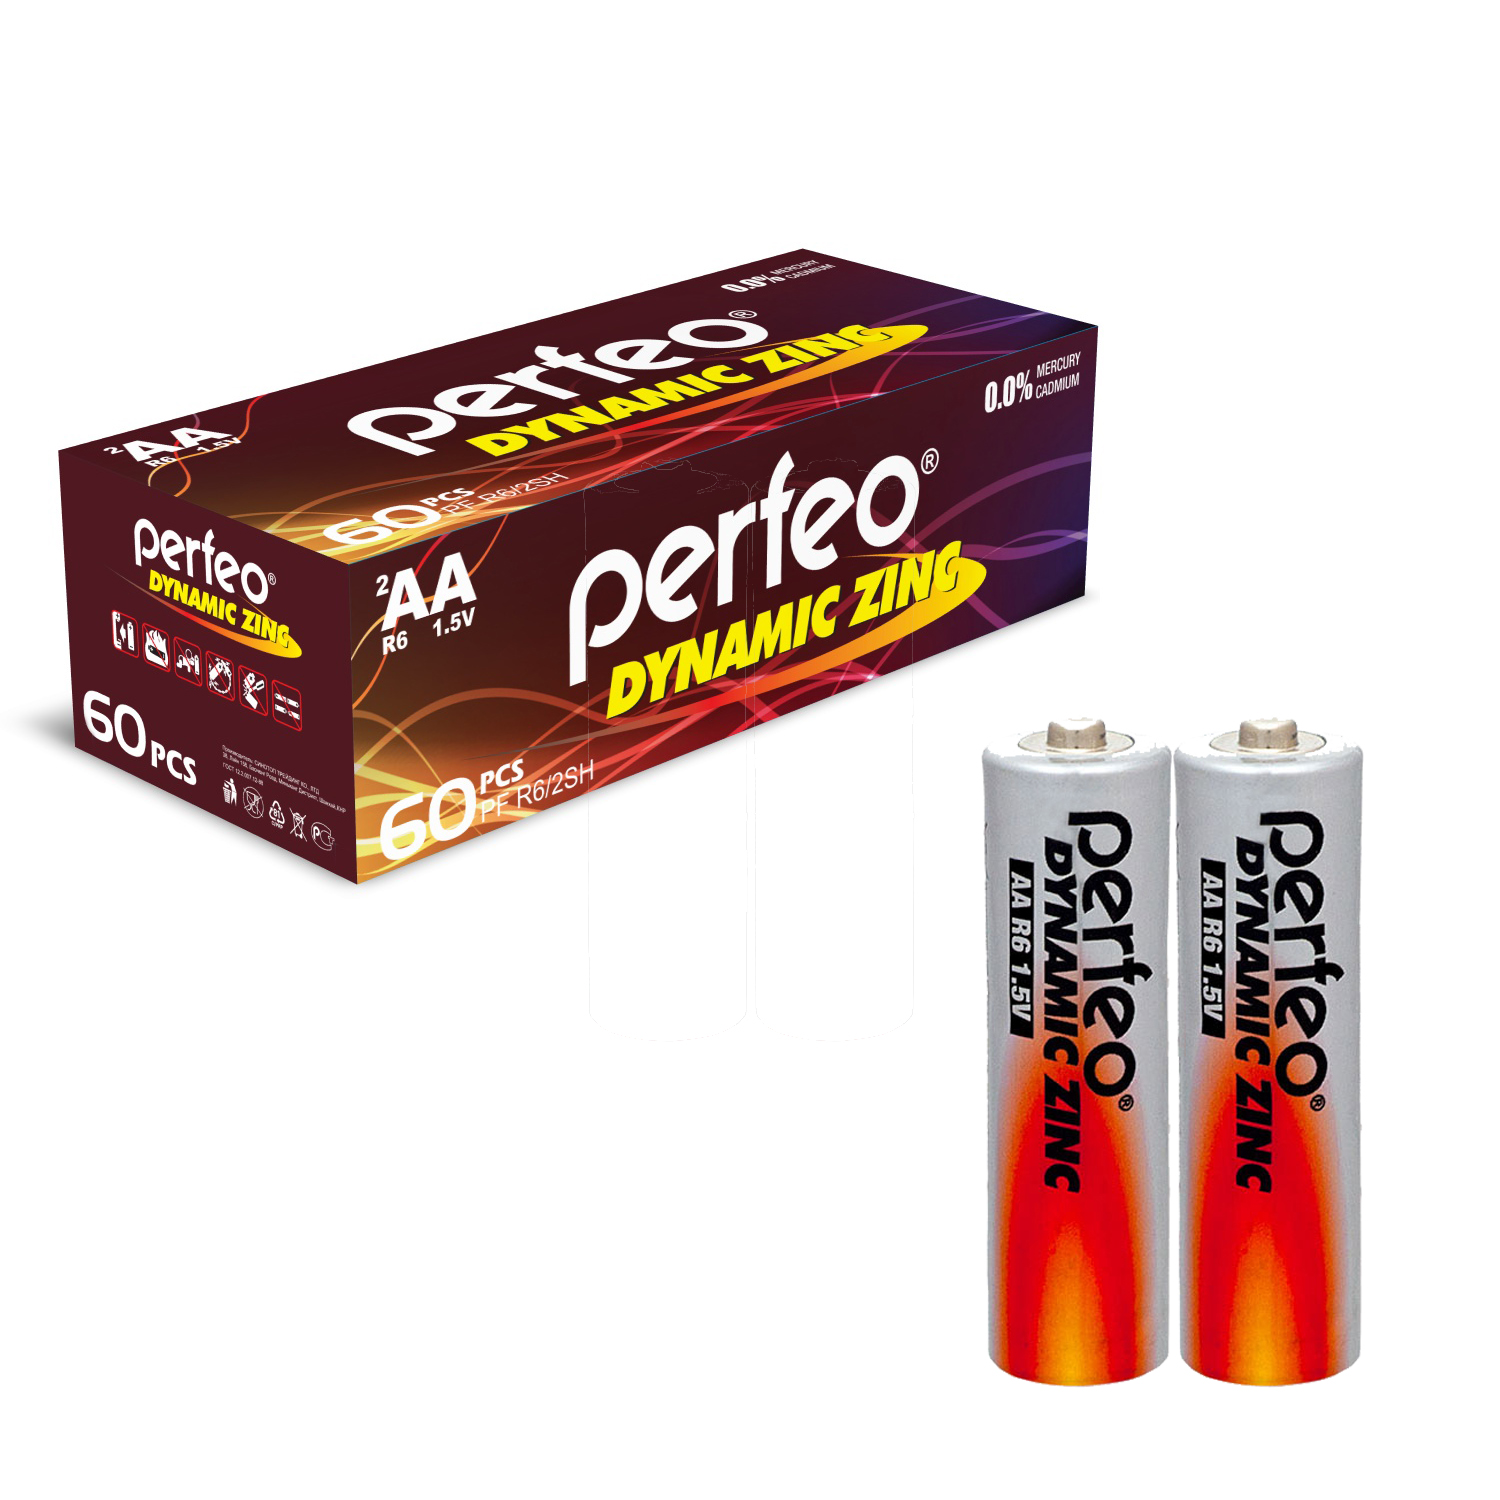 Батарейки Perfeo Dynamic Zinc AA (LR6), 60 шт, 30x2 шт батарейки perfeo dynamic zinc aa lr6 60 шт 30x2 шт